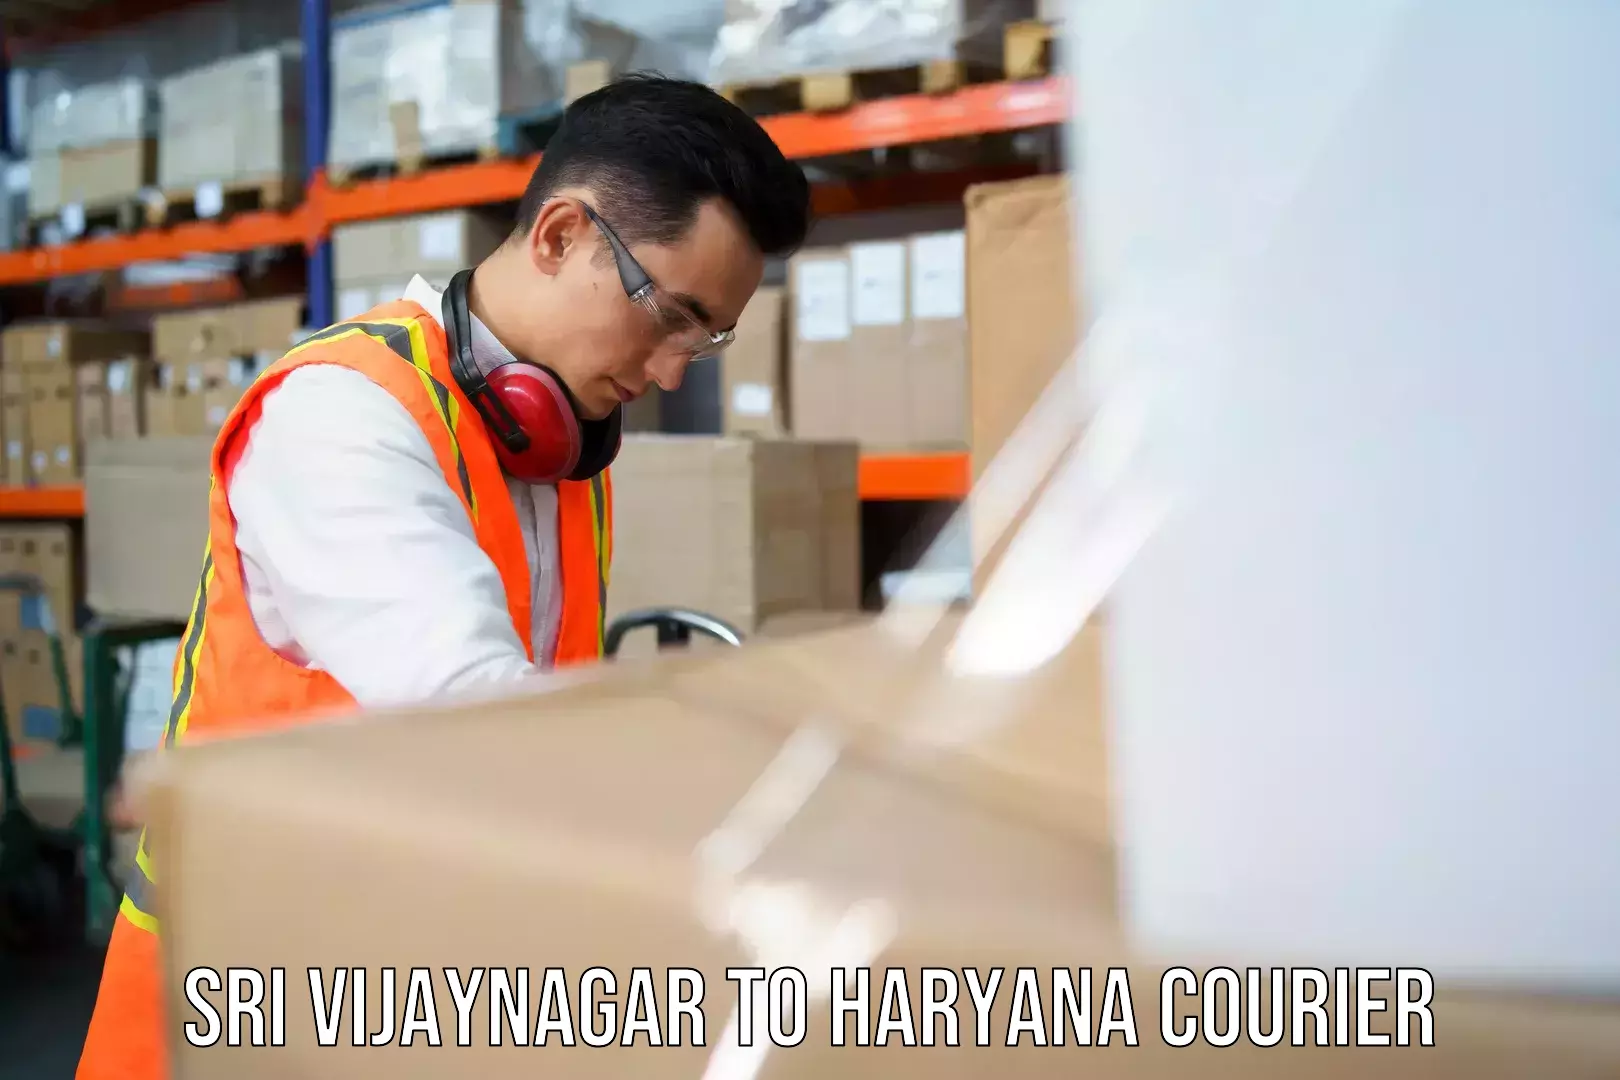 Speedy delivery service Sri Vijaynagar to Sohna